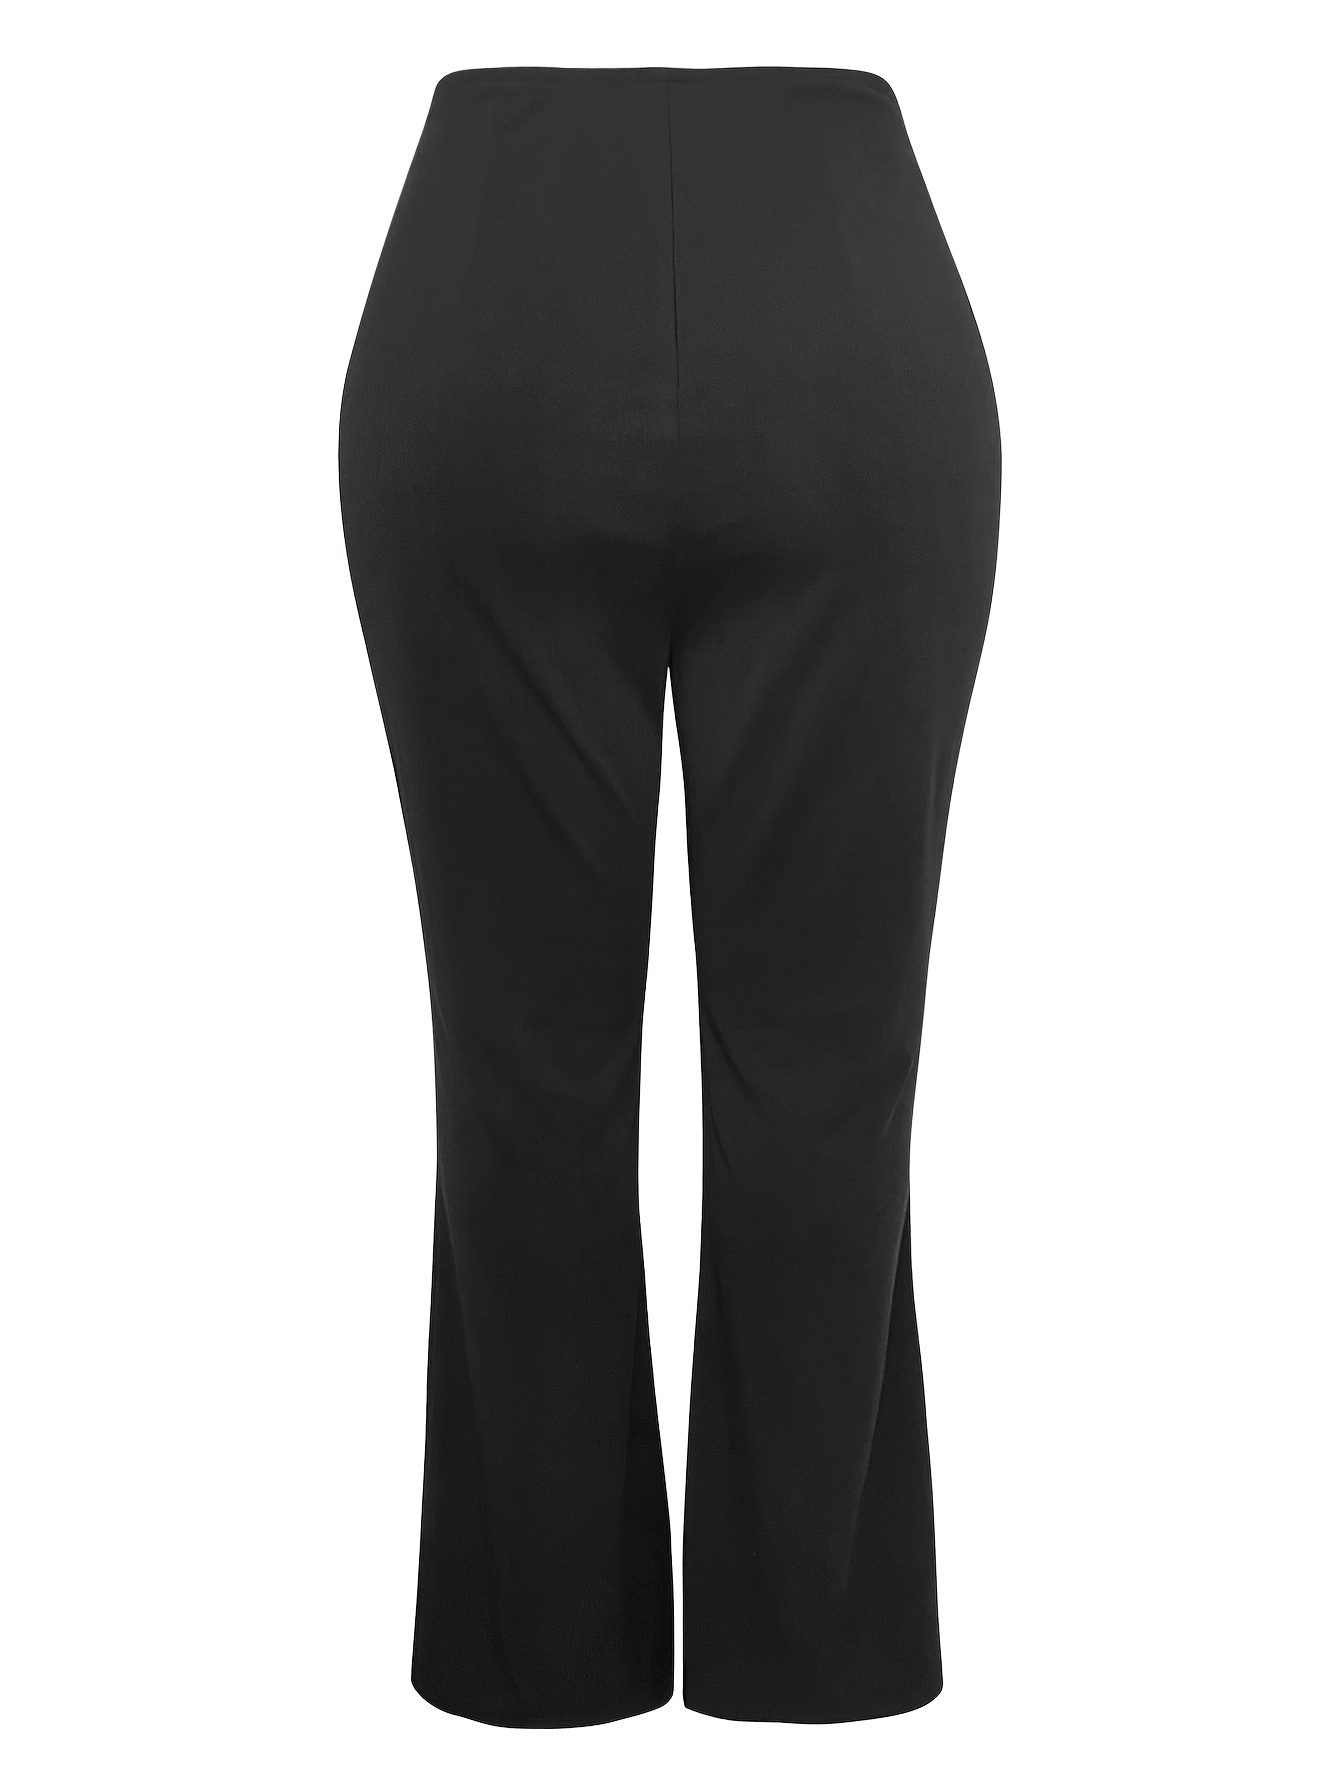 Elegant Solid Flare Leg Black Plus Size Pants (Women's) 